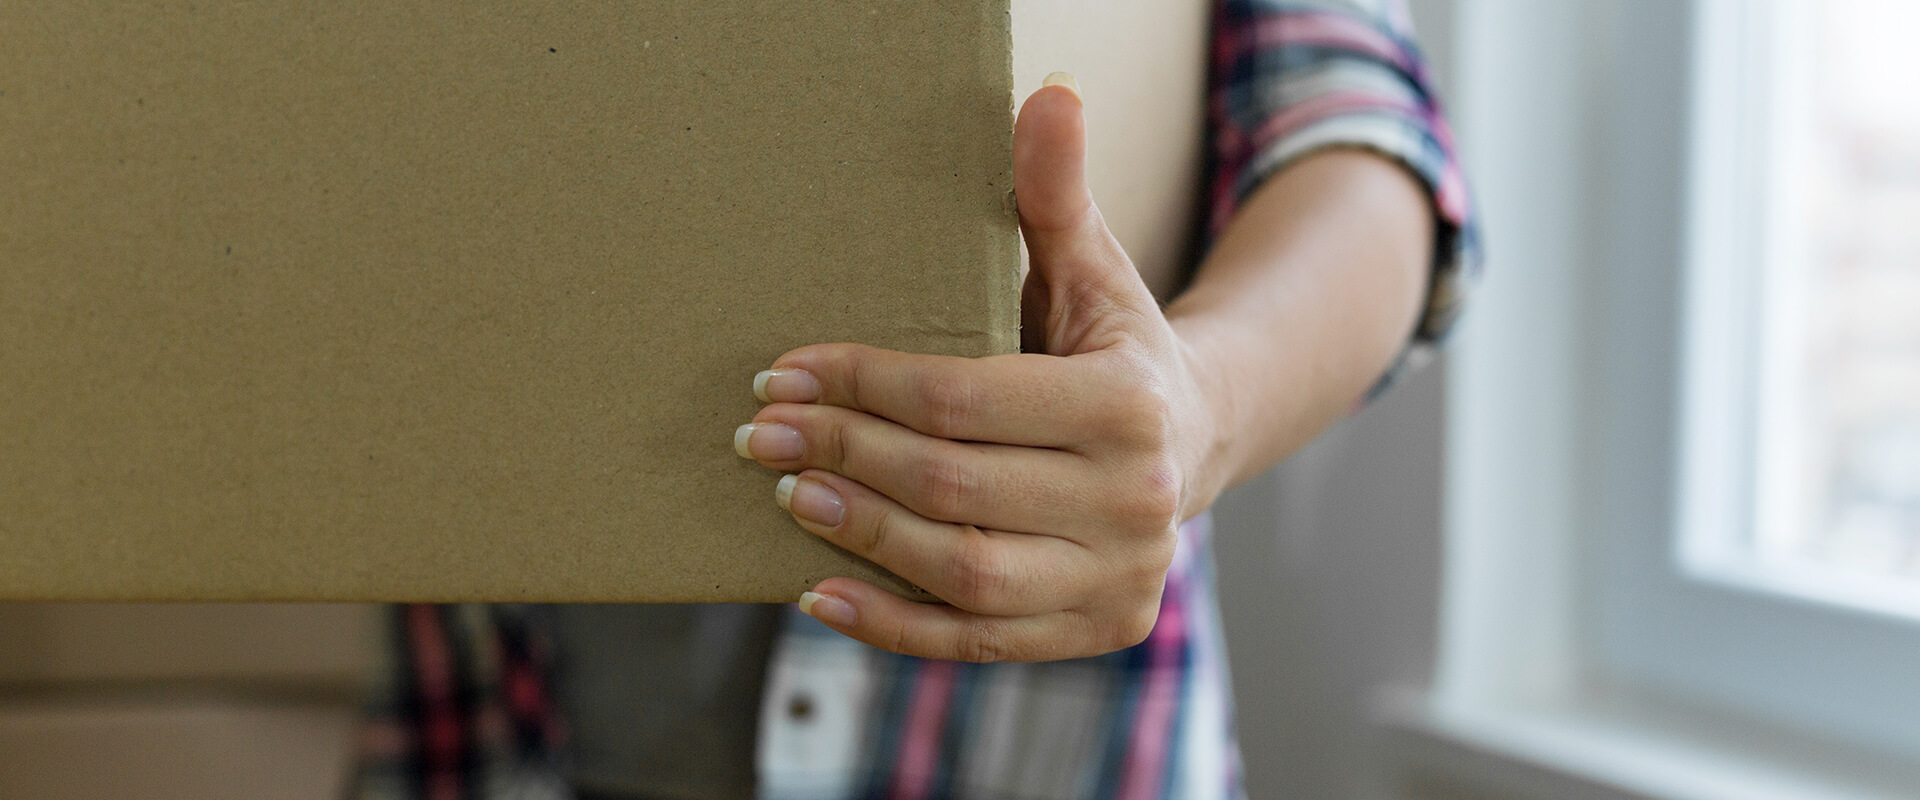 Woman carrying a cardboard box